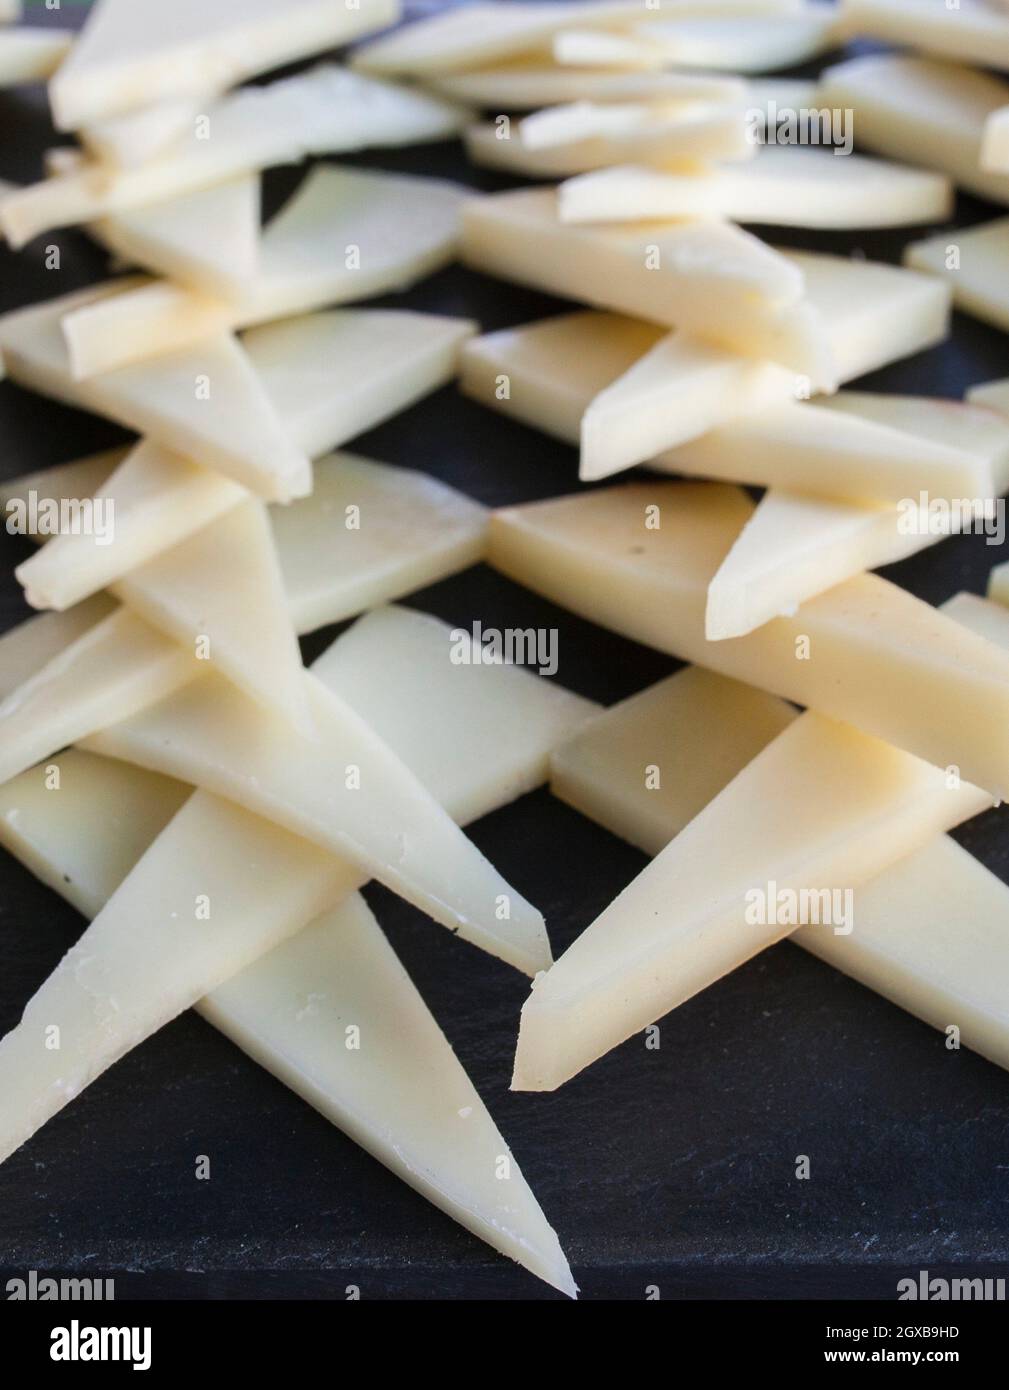 Rebanadas curadas de queso manchego sobre bandeja de pizarra negra. Primer plano. Foto de stock